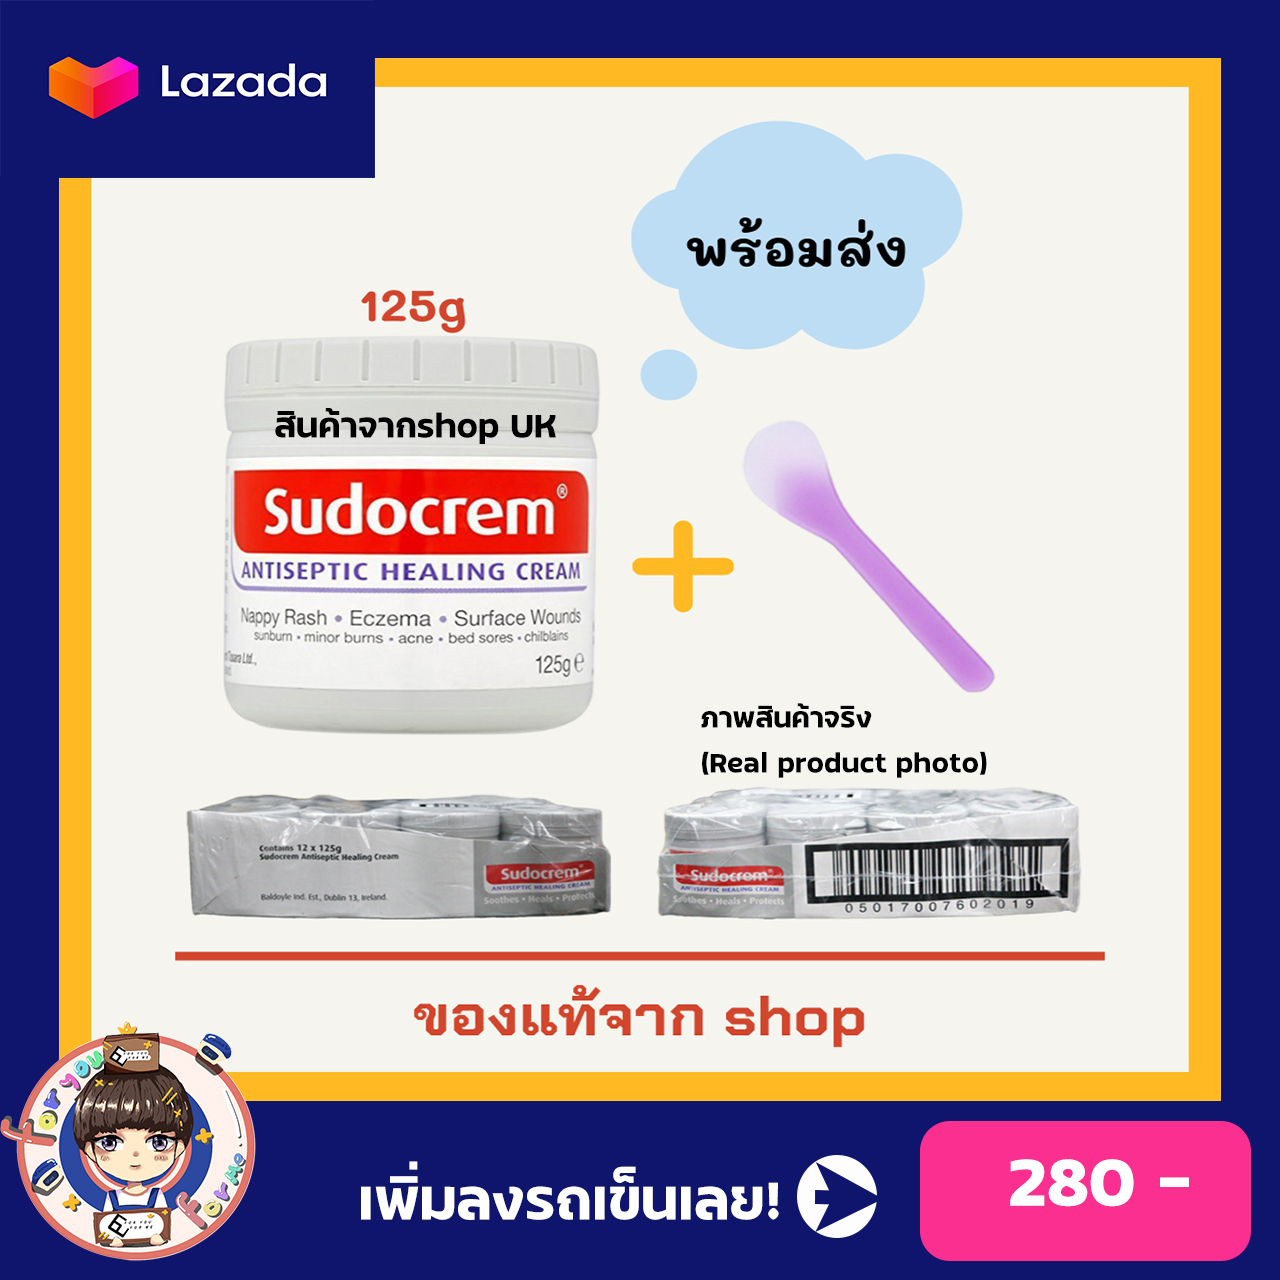 ( From shop in Singapore ) Sudo crem Sudo cream ซูโดครีม ซูโด ขนาด125กรัม แก้ผื่นผ้าอ้อม ผิวแห้ง แก้ผดผื่นสำหรับทารก